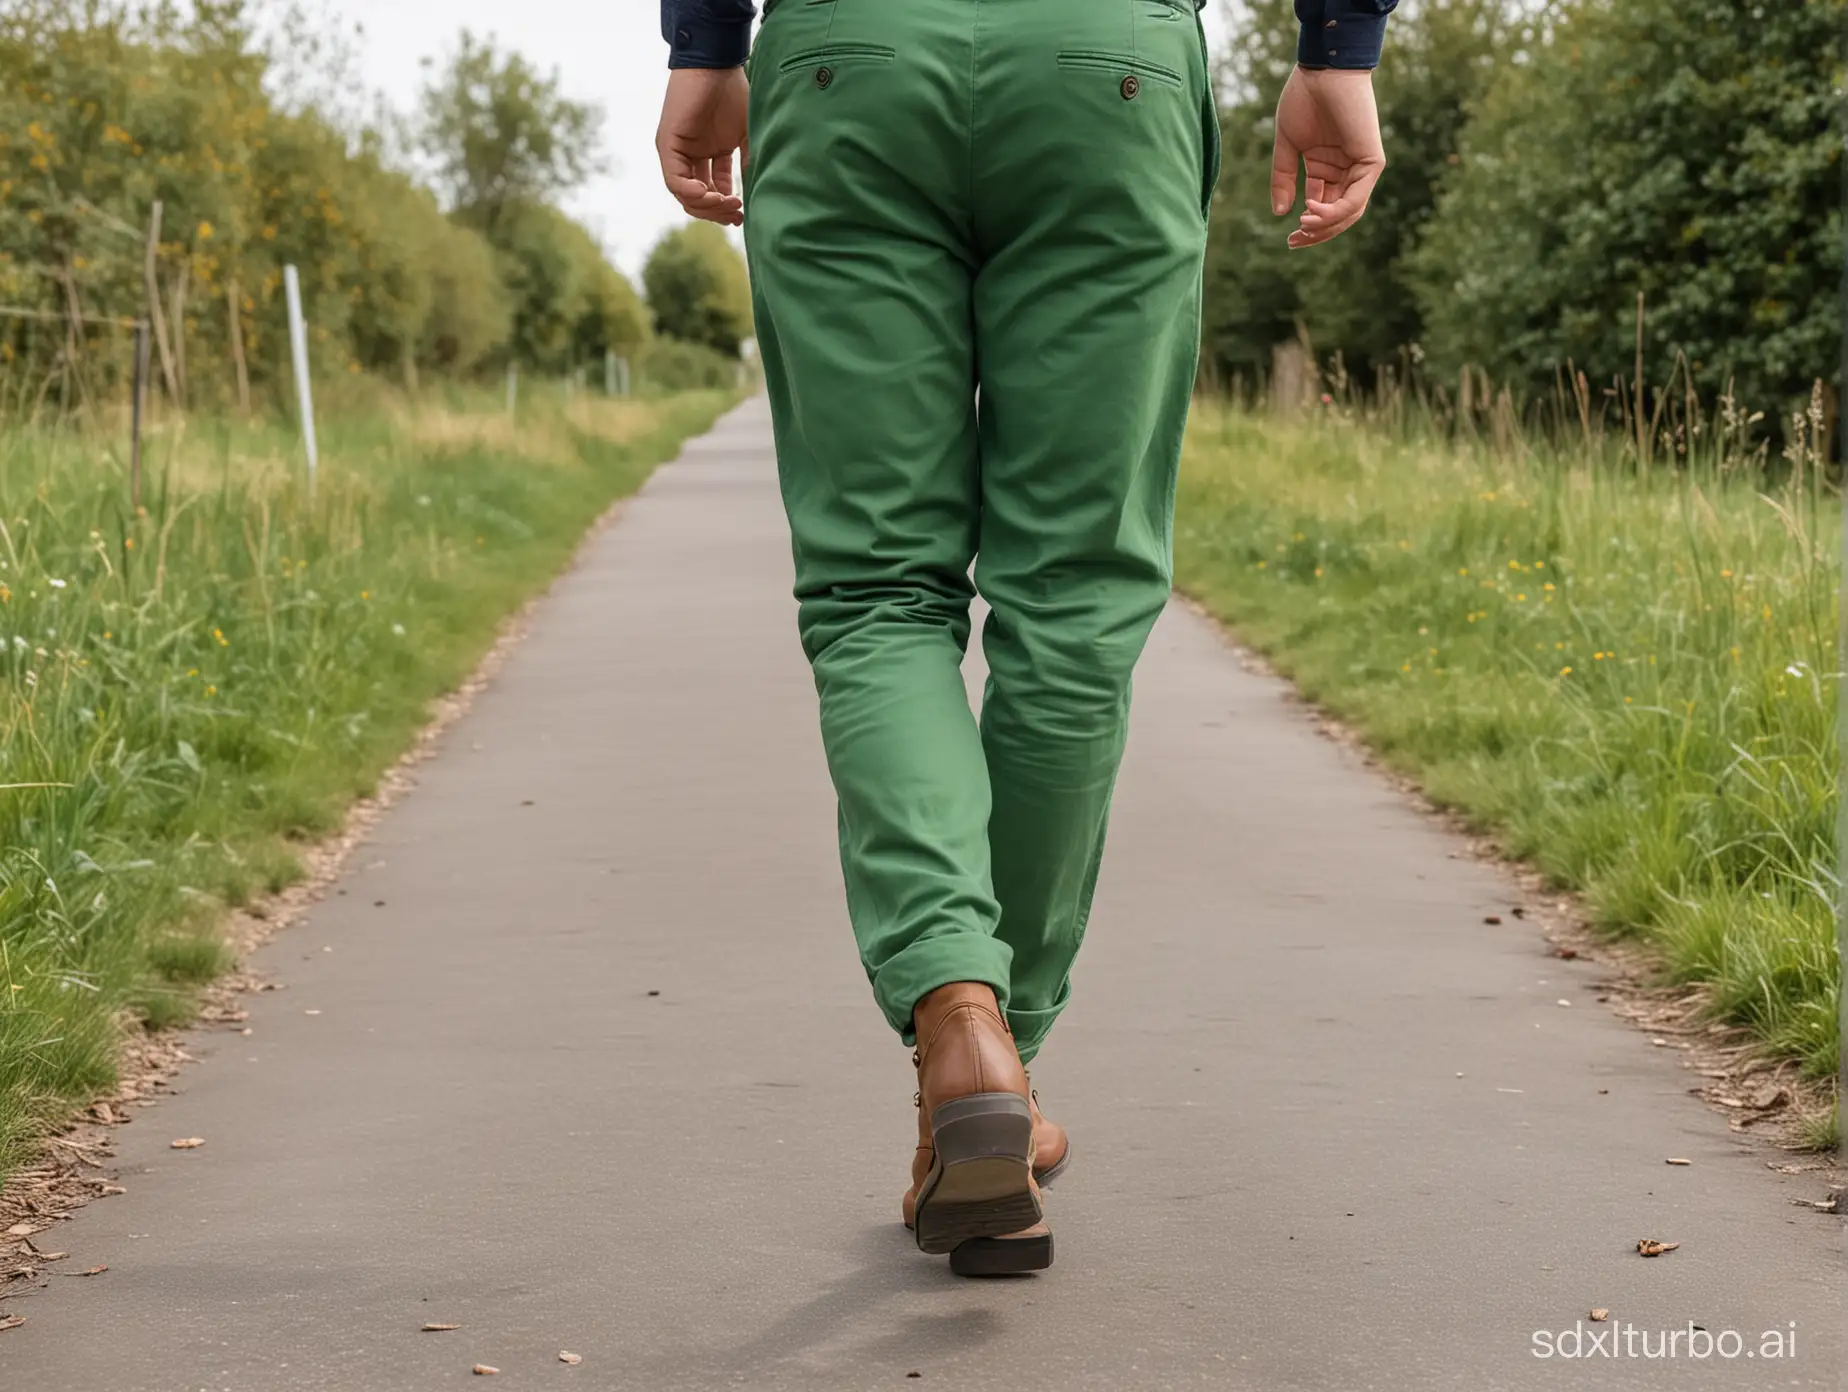 Person-in-Green-Trousers-Walking-Away